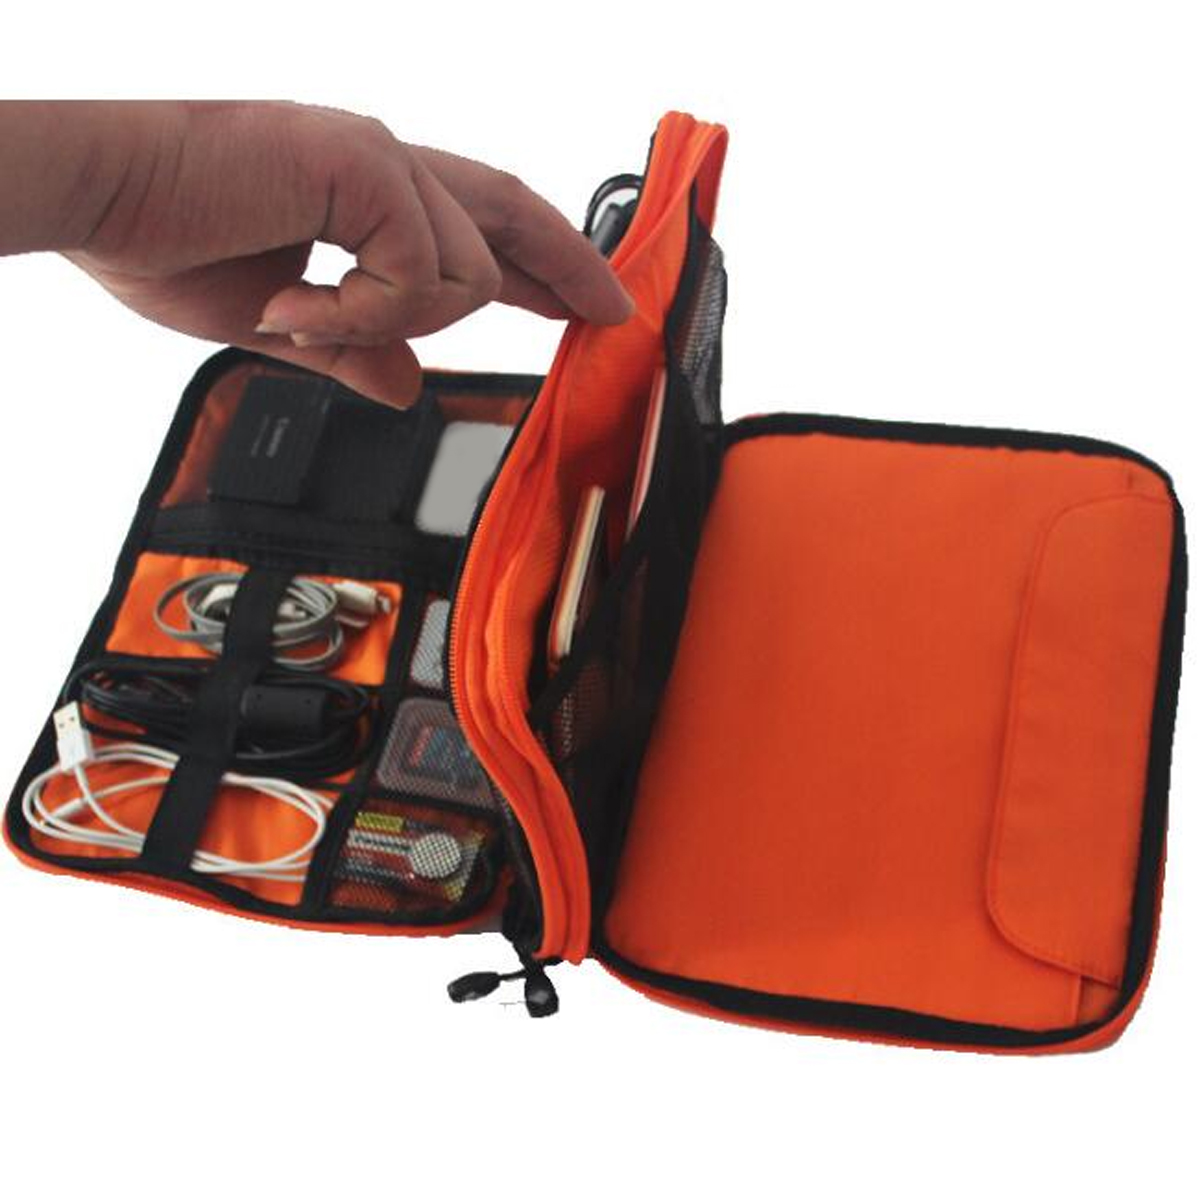 Waterproof-Digital-Accessories-Storage-Bag-USB-Data-Cable-Earphone-Wire-Flash-Drive-Pen-Power-Bank-T-1617036-2